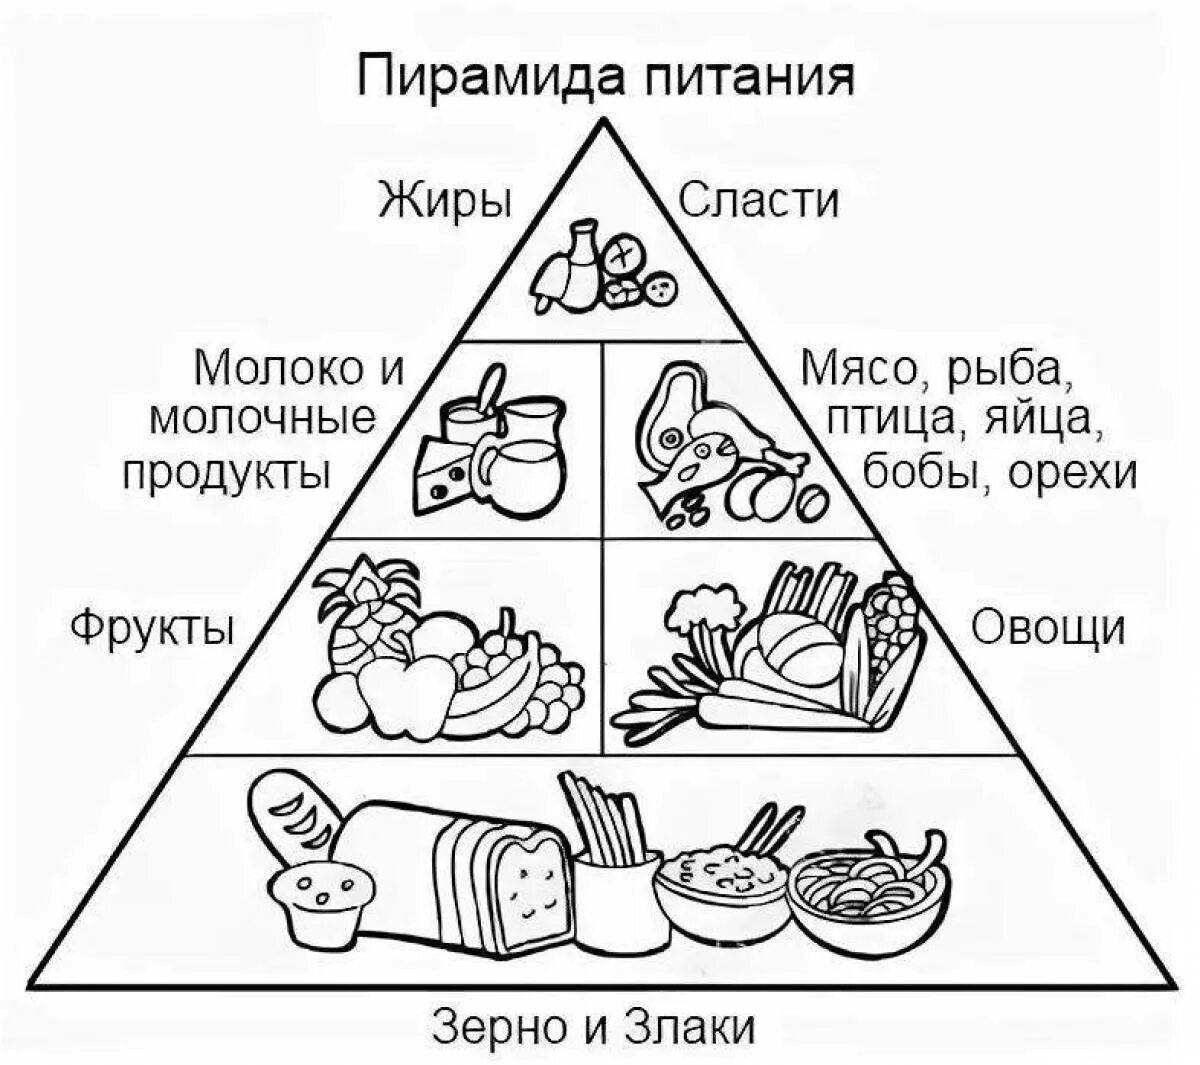 Пирамида питания #30